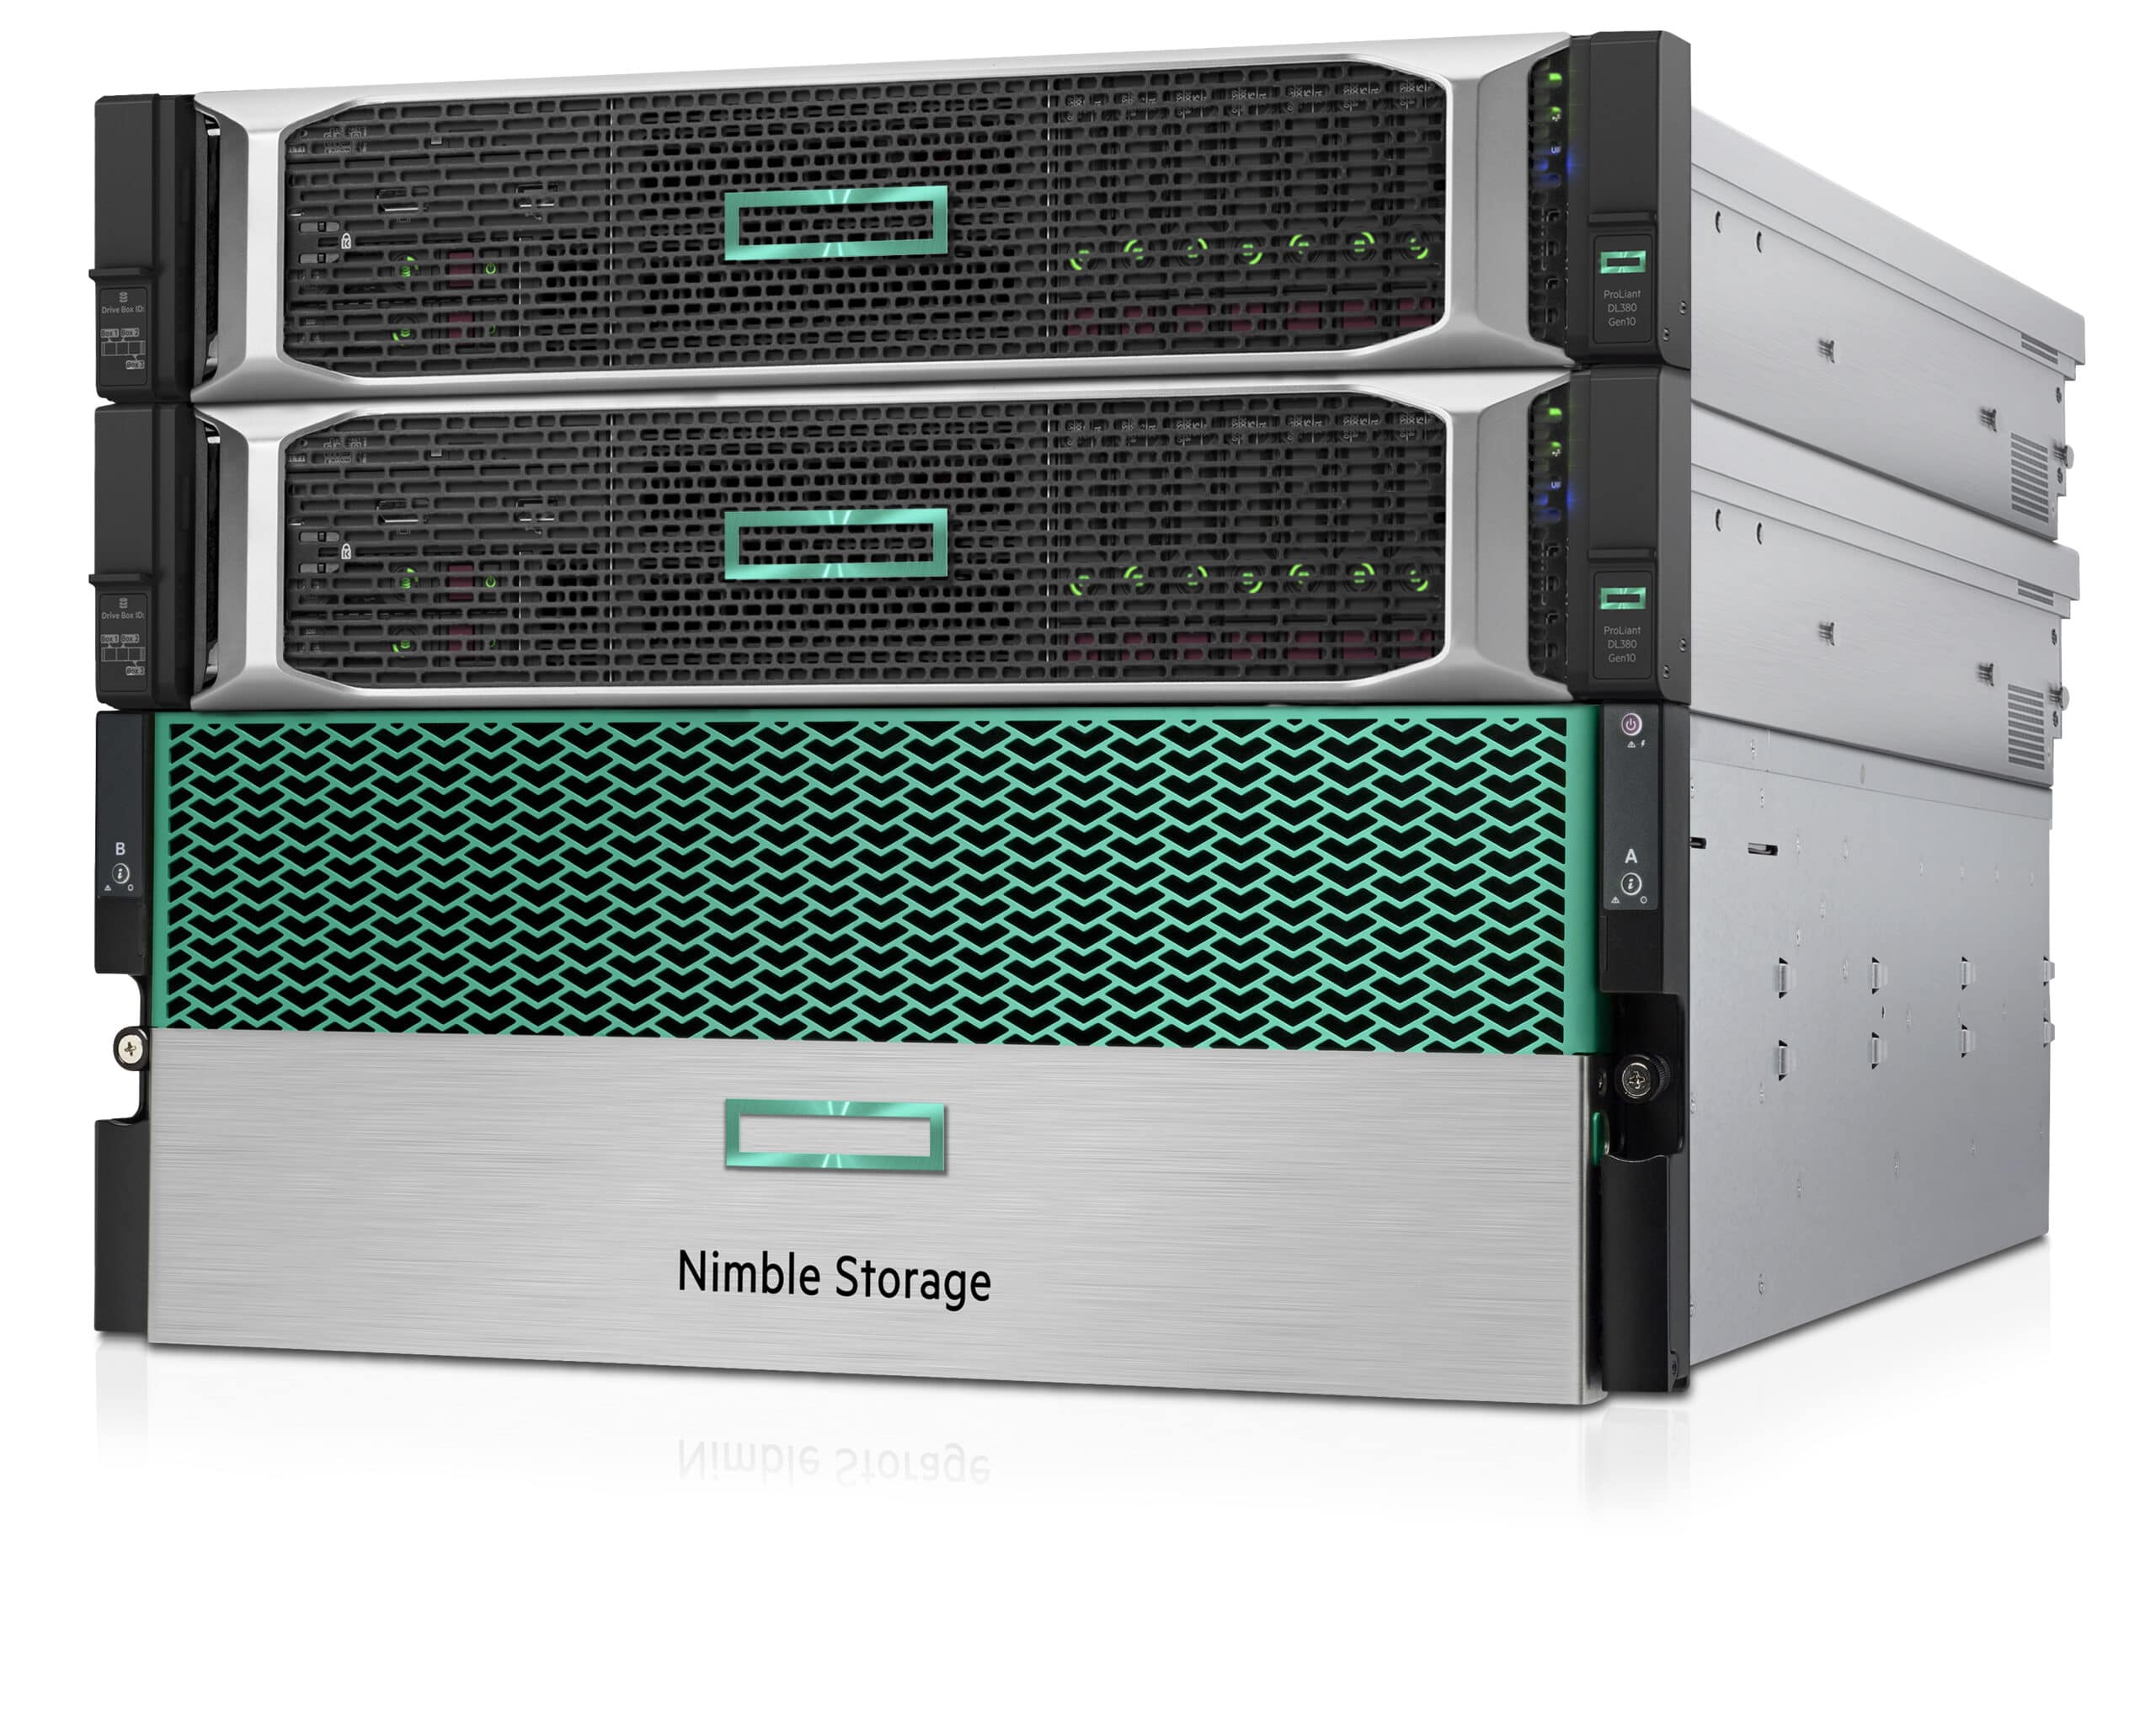 Nimble Storage's shared storage appliance